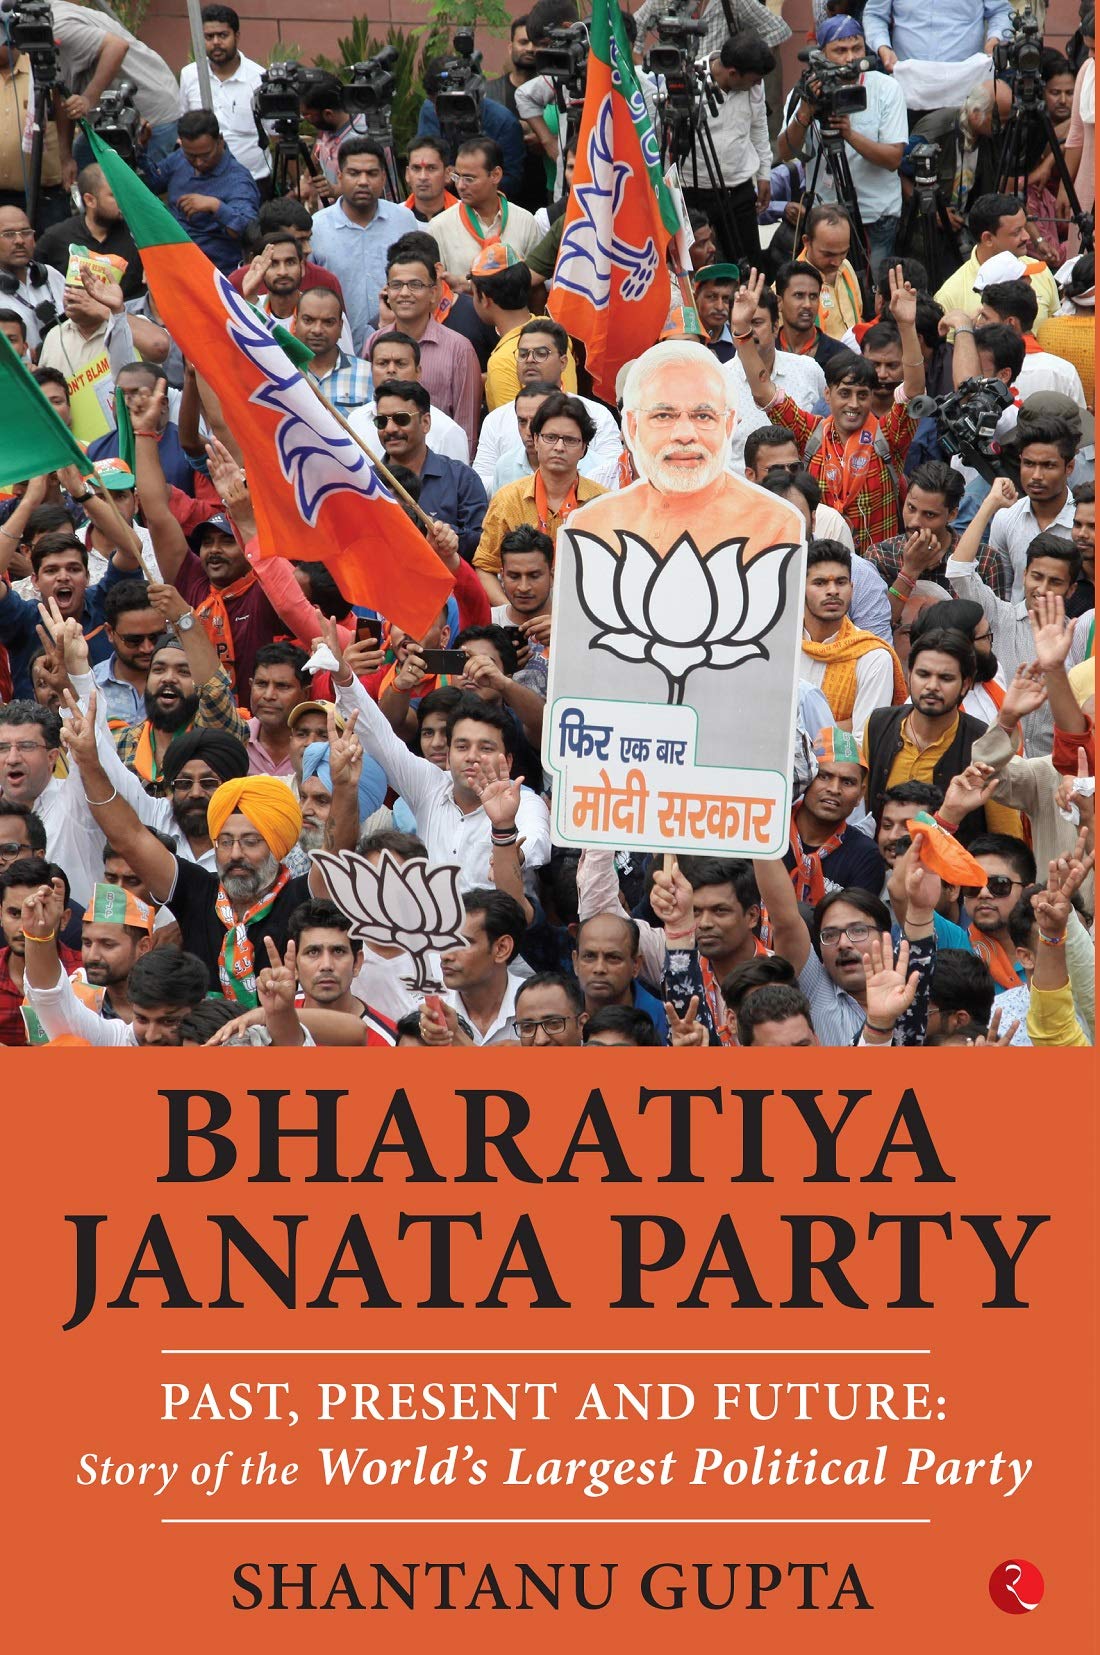 BHARATIYA JANATA PARTY PAST, PRESENT AND FUTURE